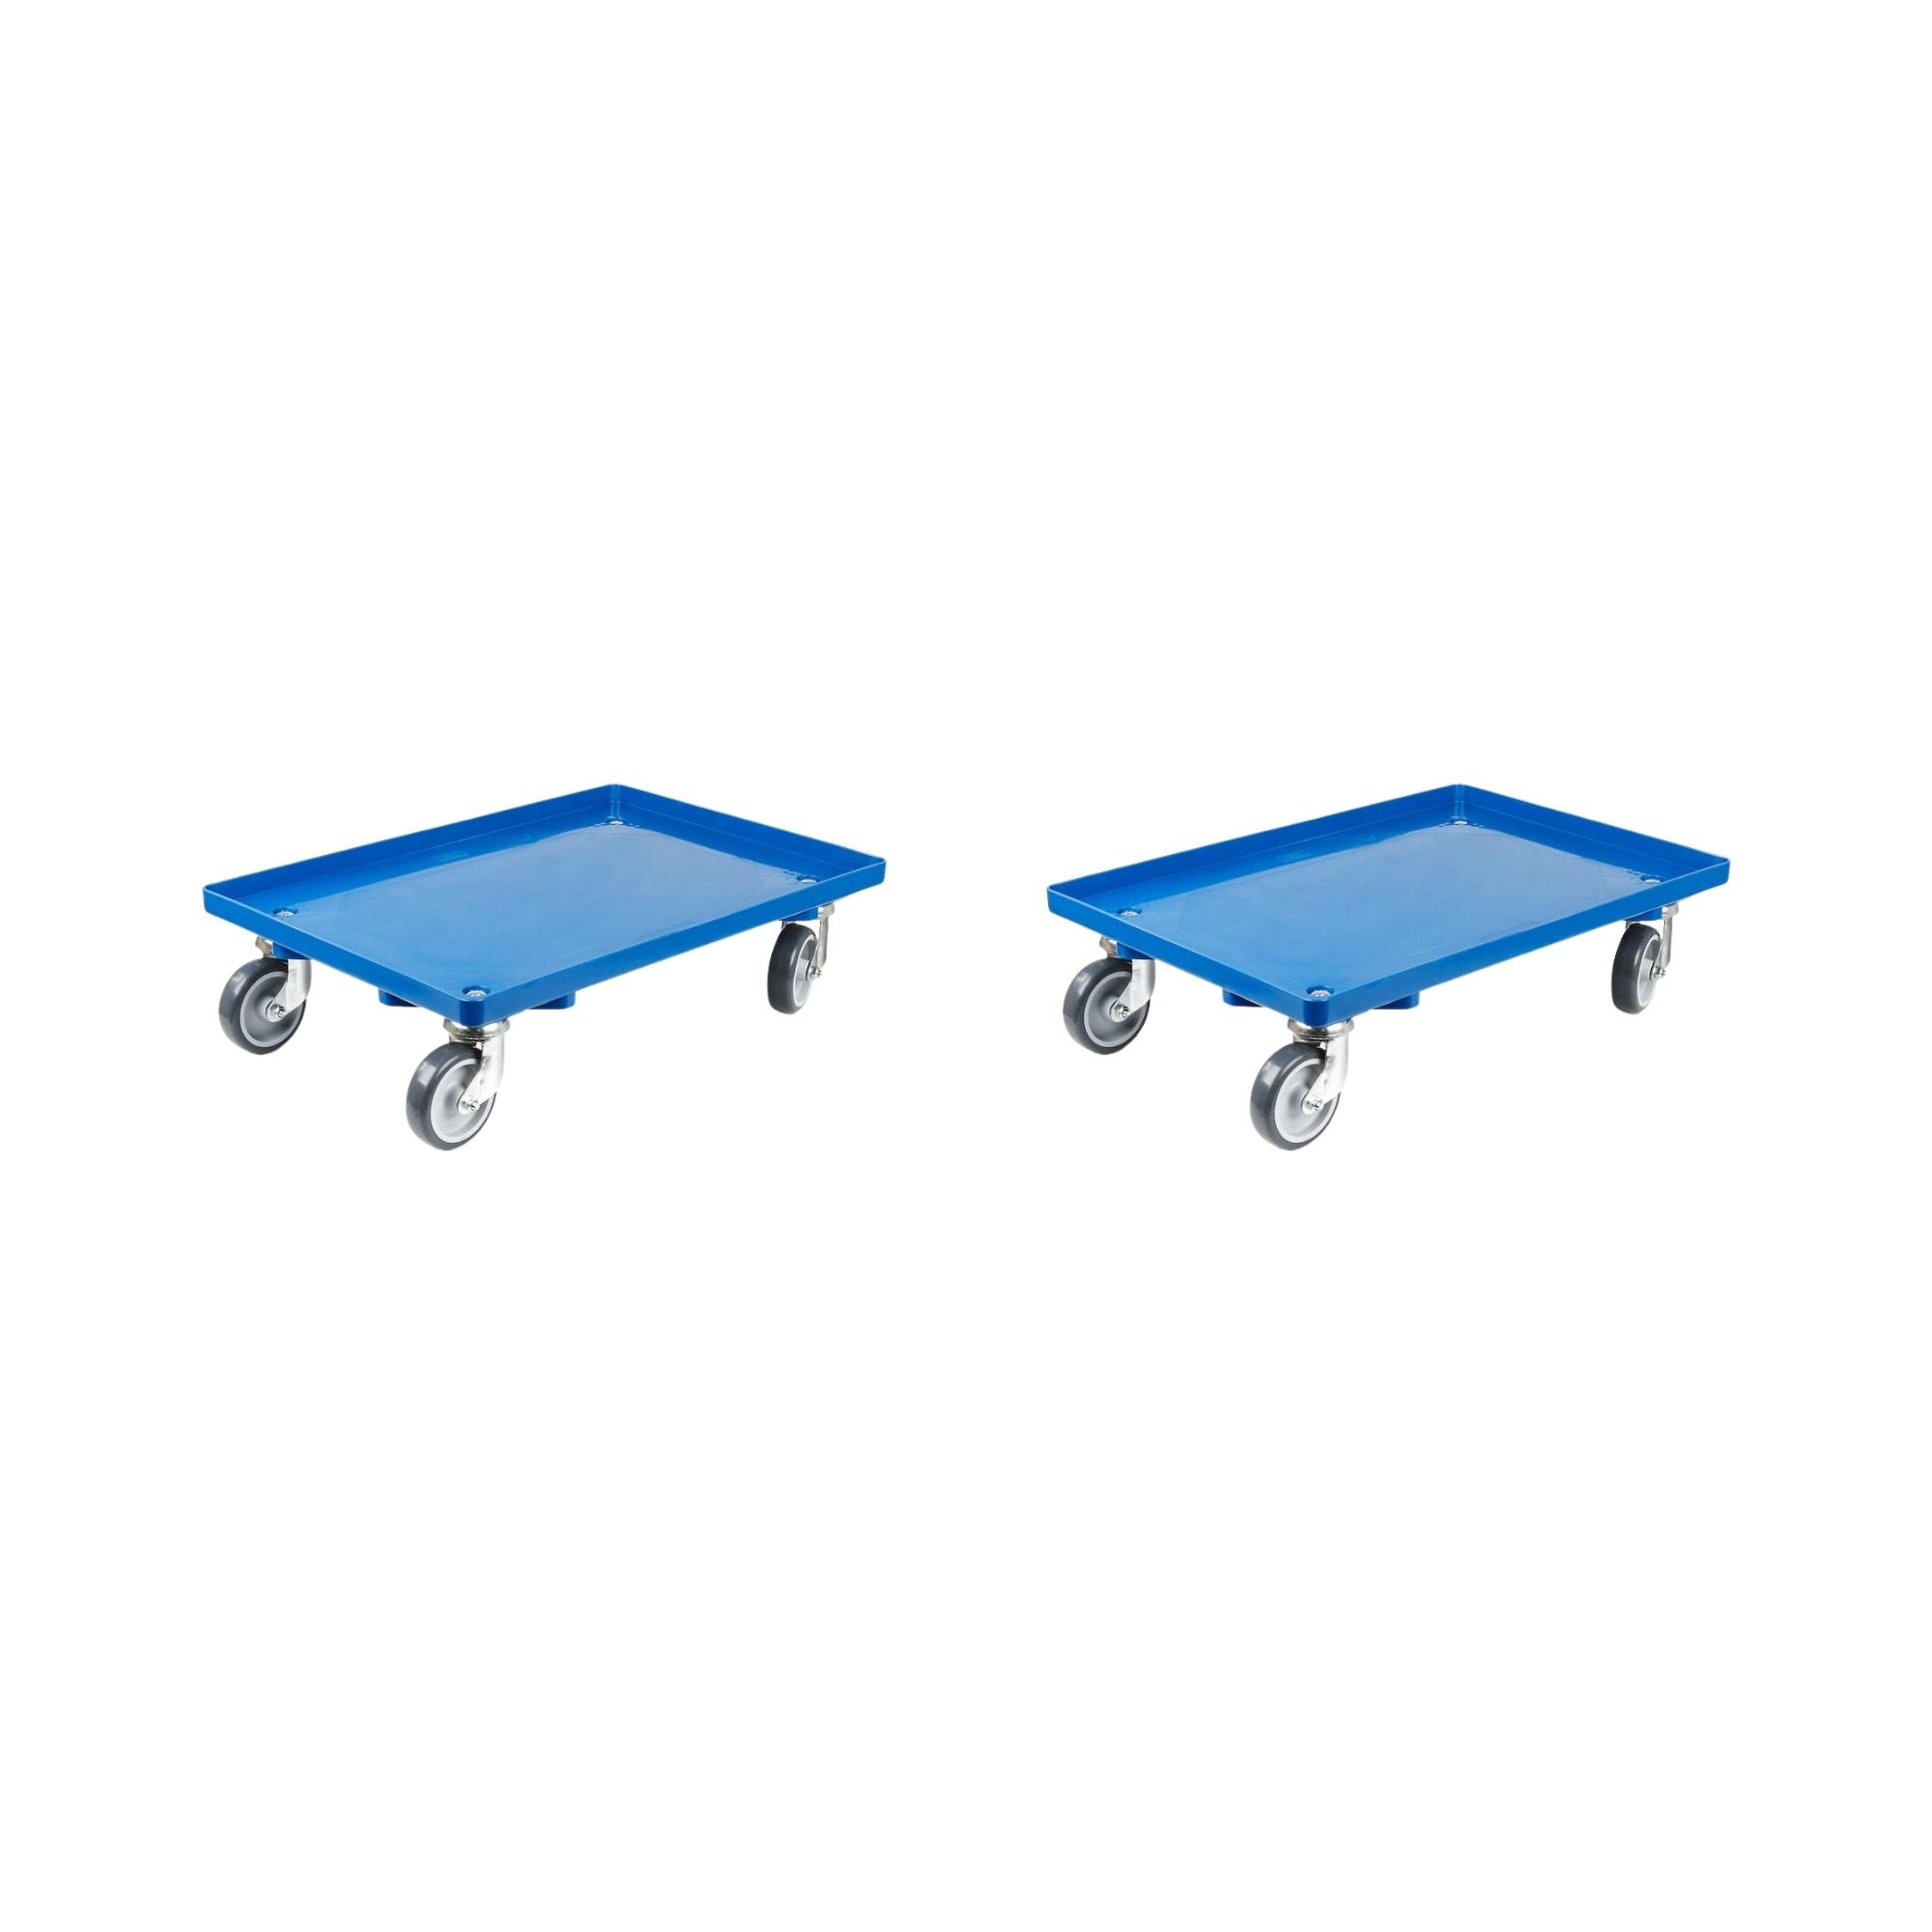 SparSet 2x Transportroller für Euroboxen 60x40cm mit Gummiräder blau | Geschlossenes Deck | 2 Lenkrollen & 2 Bremsrollen | Traglast 300kg | Kistenroller Logistikroller Rollwagen Profi-Fahrgestell